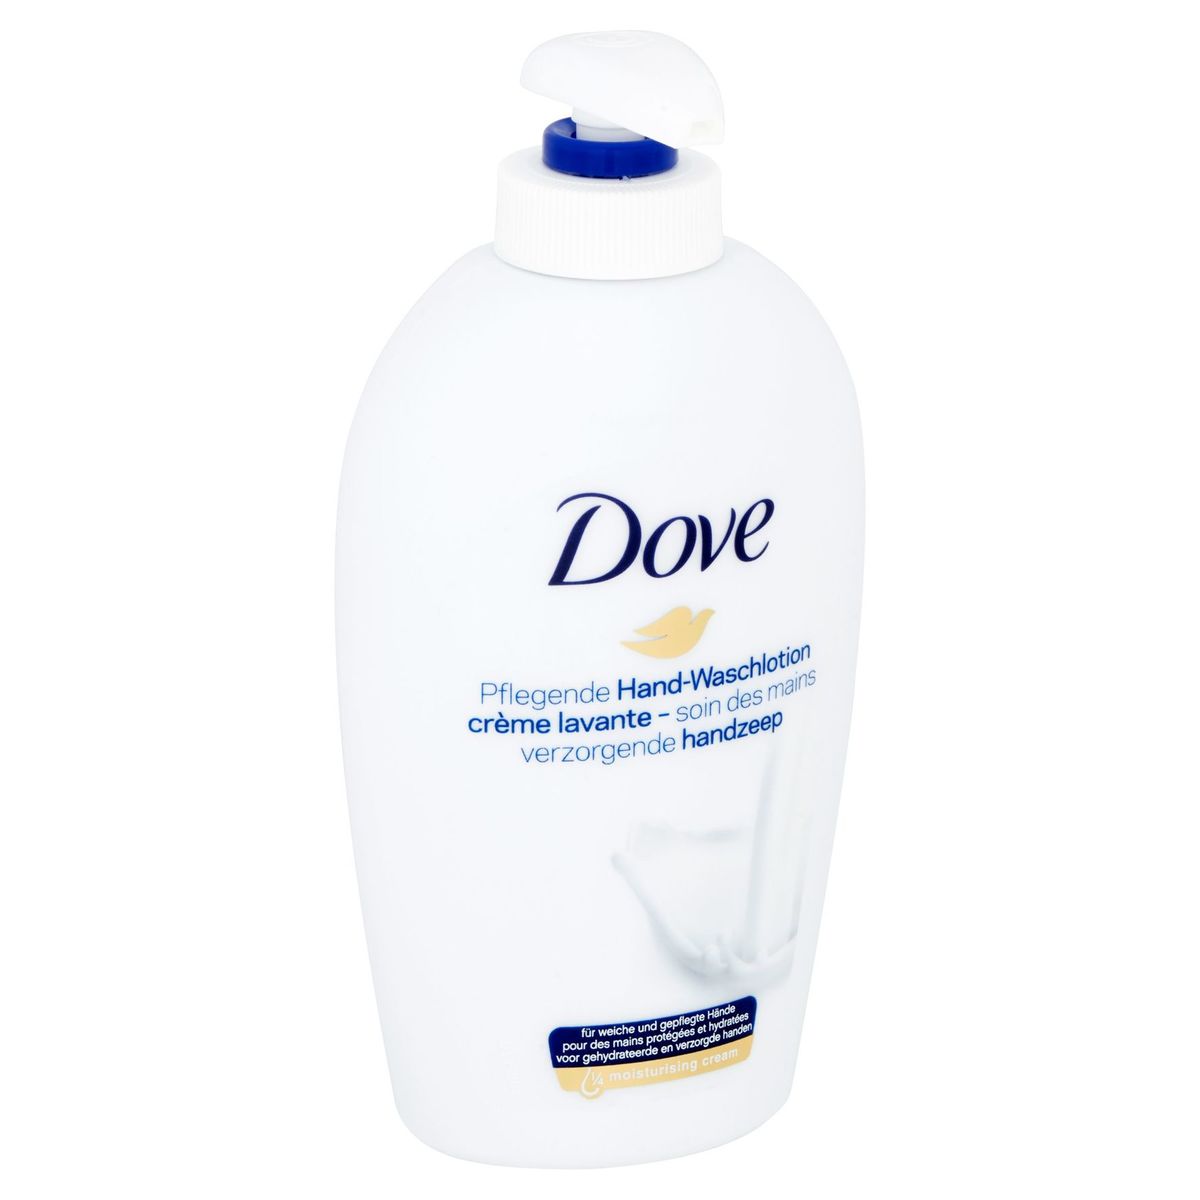 Dove Handzeep Original 250 ml